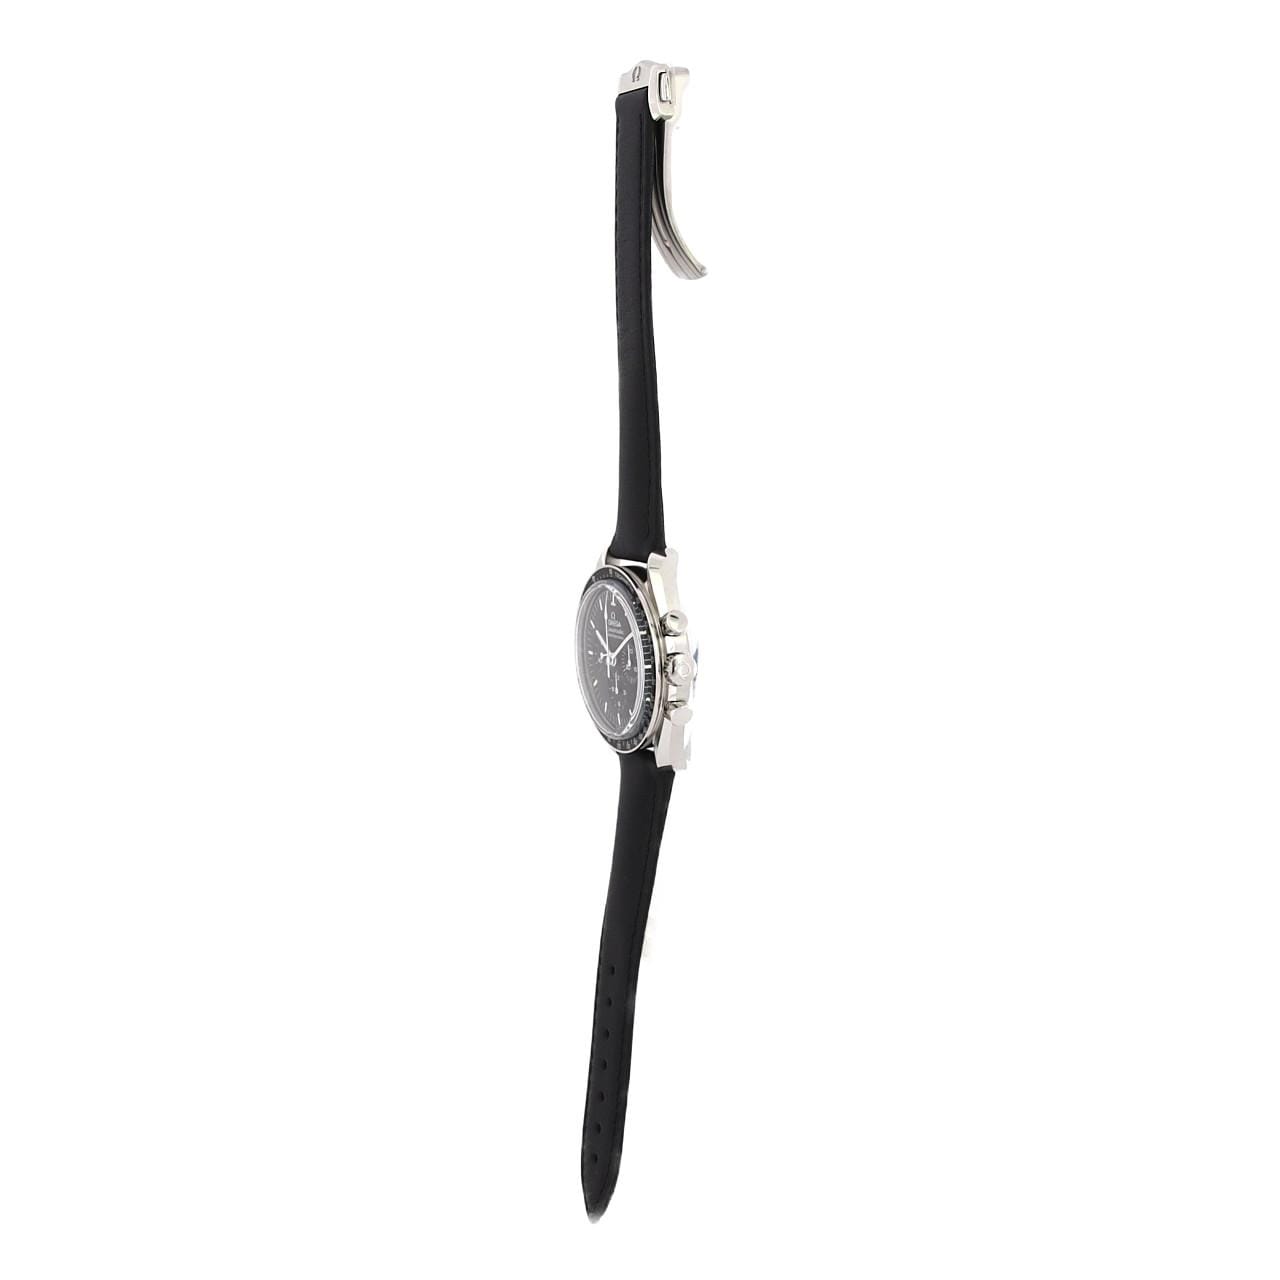 [BRAND NEW] Omega Speedmaster Moonwatch Professional 310.32.42.50.01.002 SS Manual Winding